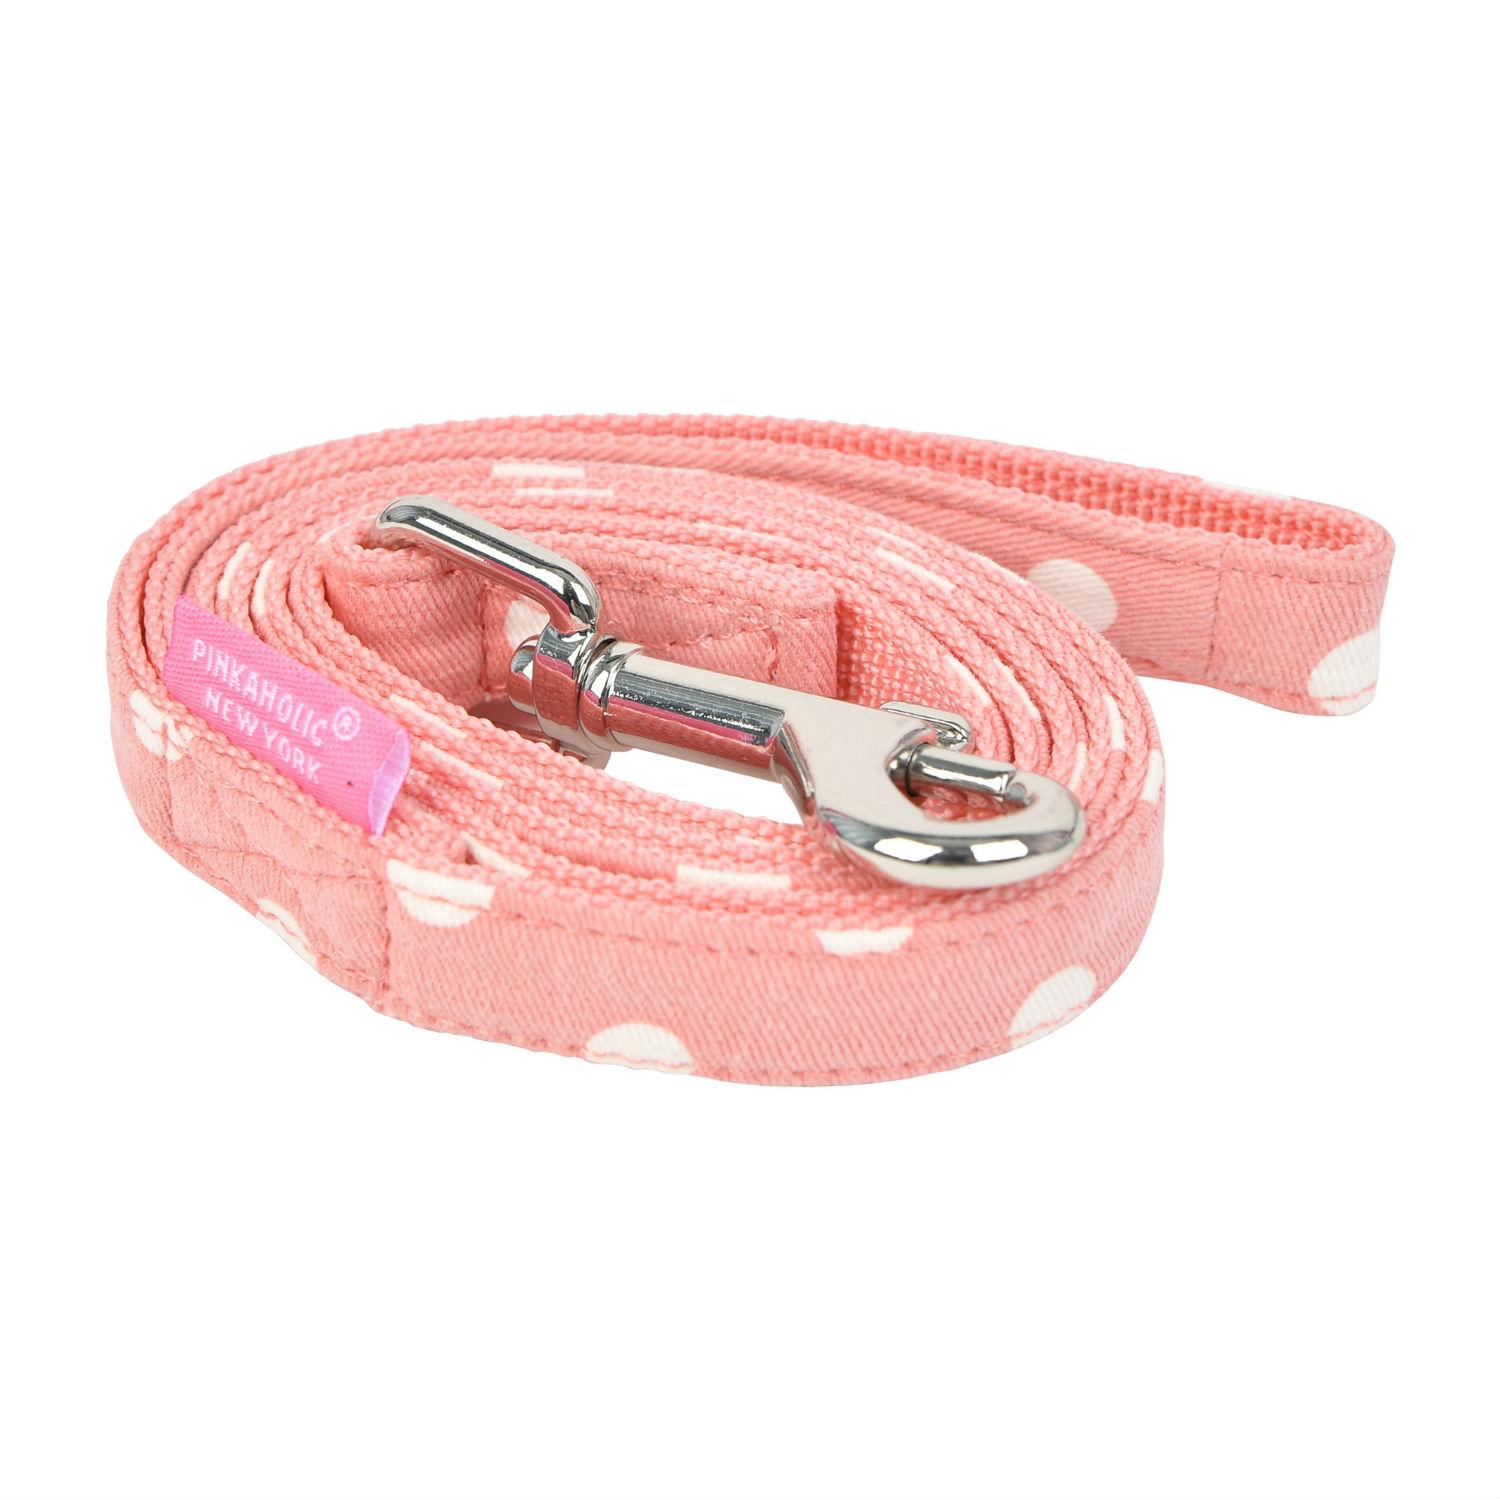 Ida Dog Leash by Pinkaholic - Pink